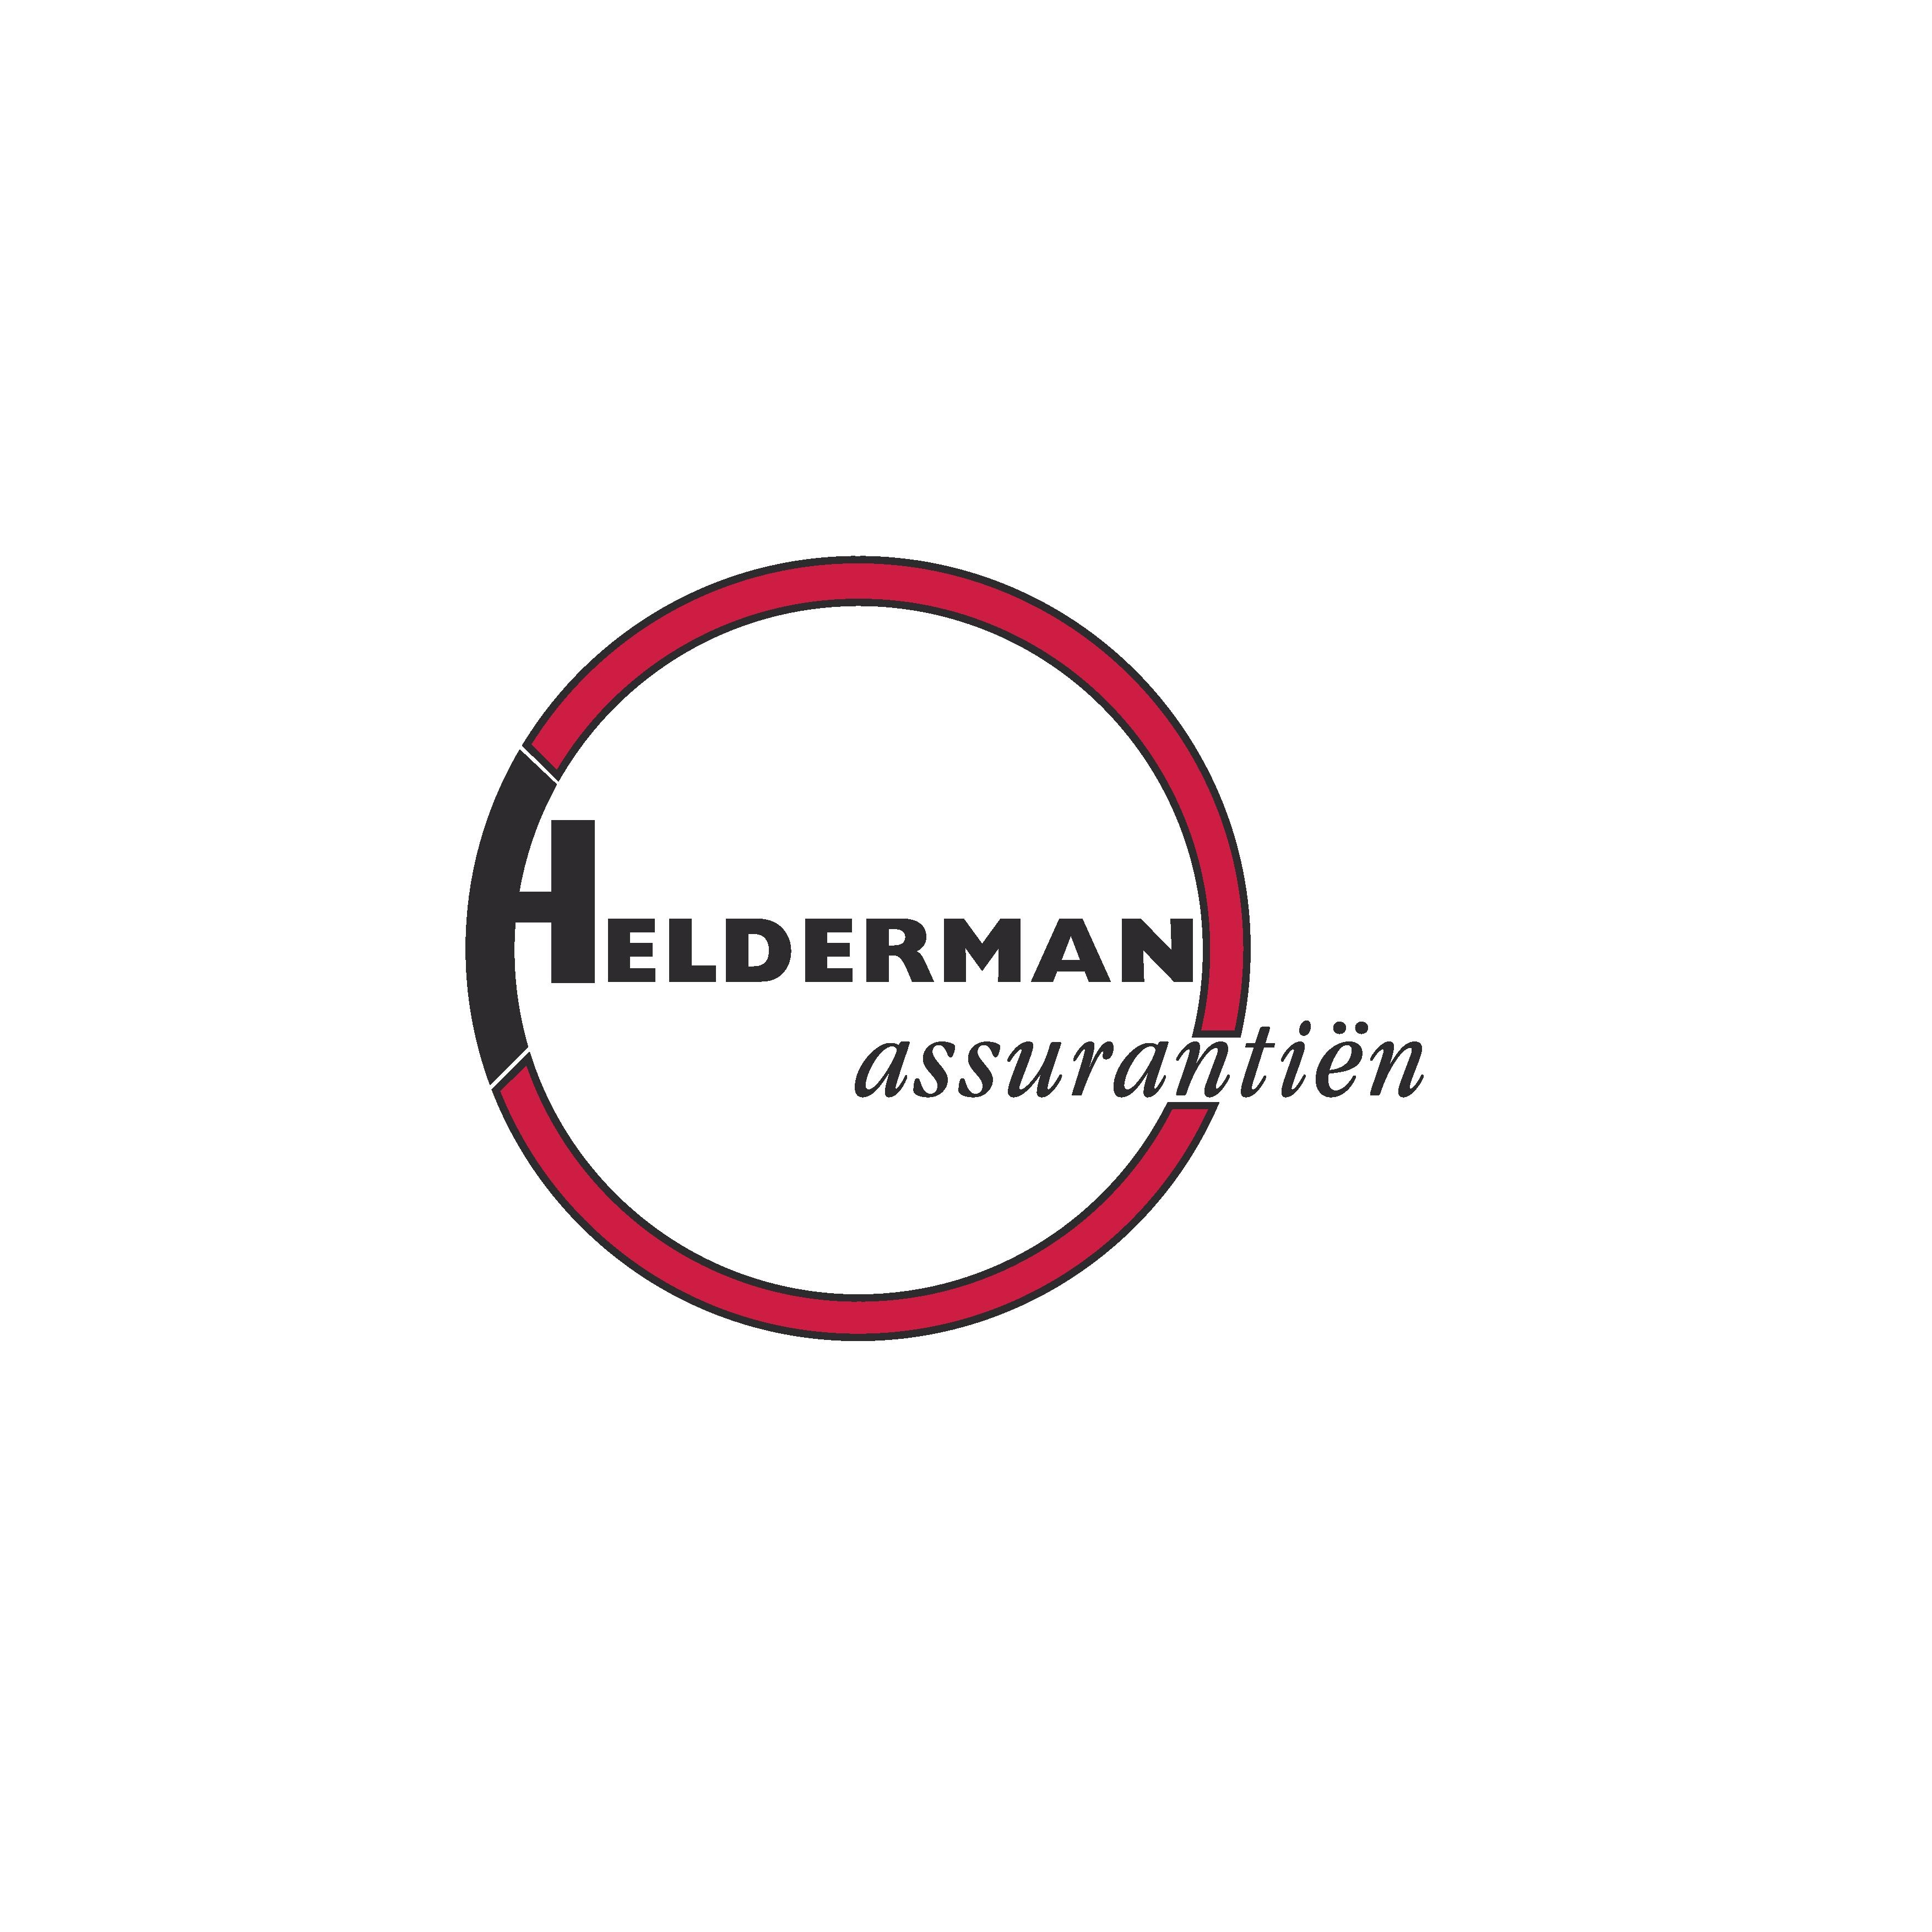 Helderman assurantiën Logo